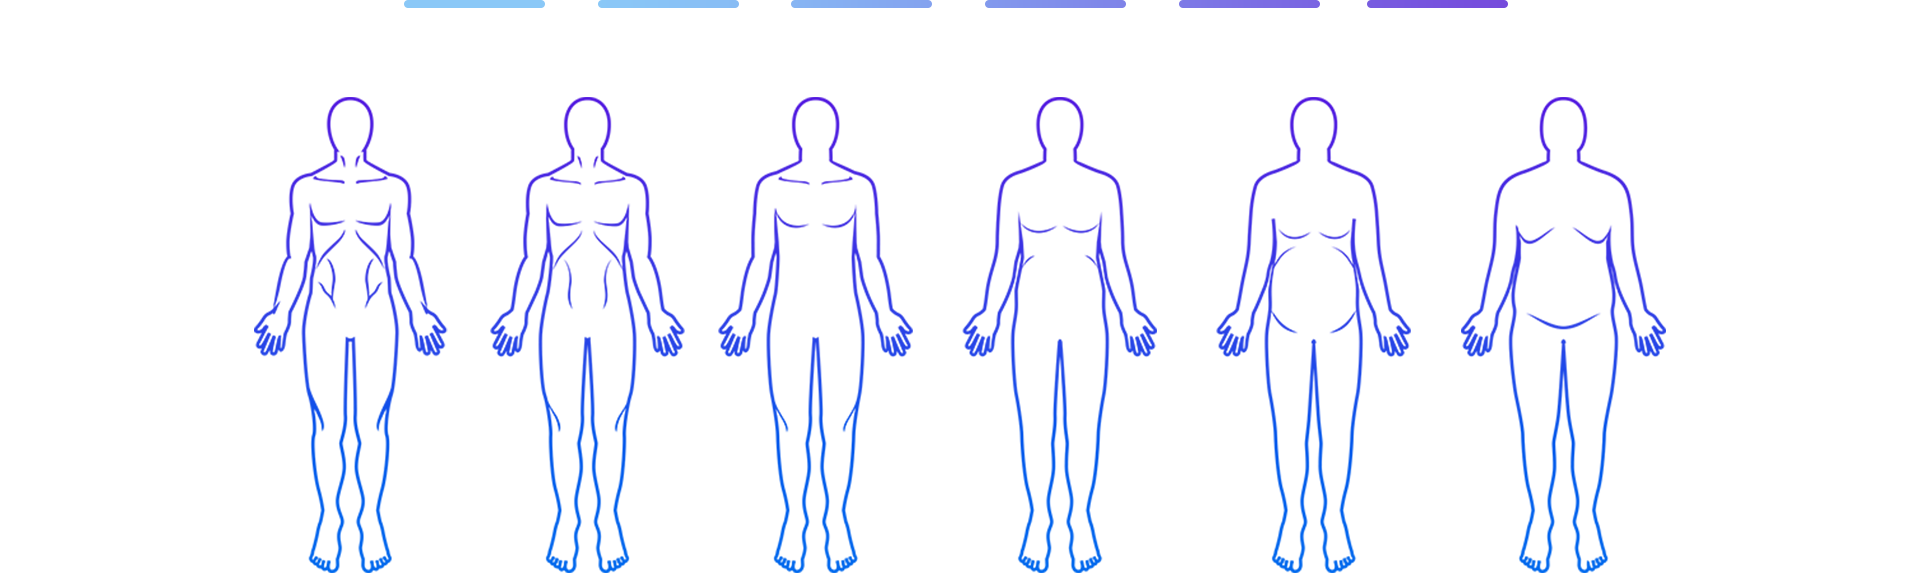 HUAWEI Scale 3 Pro Body Fat Percentage